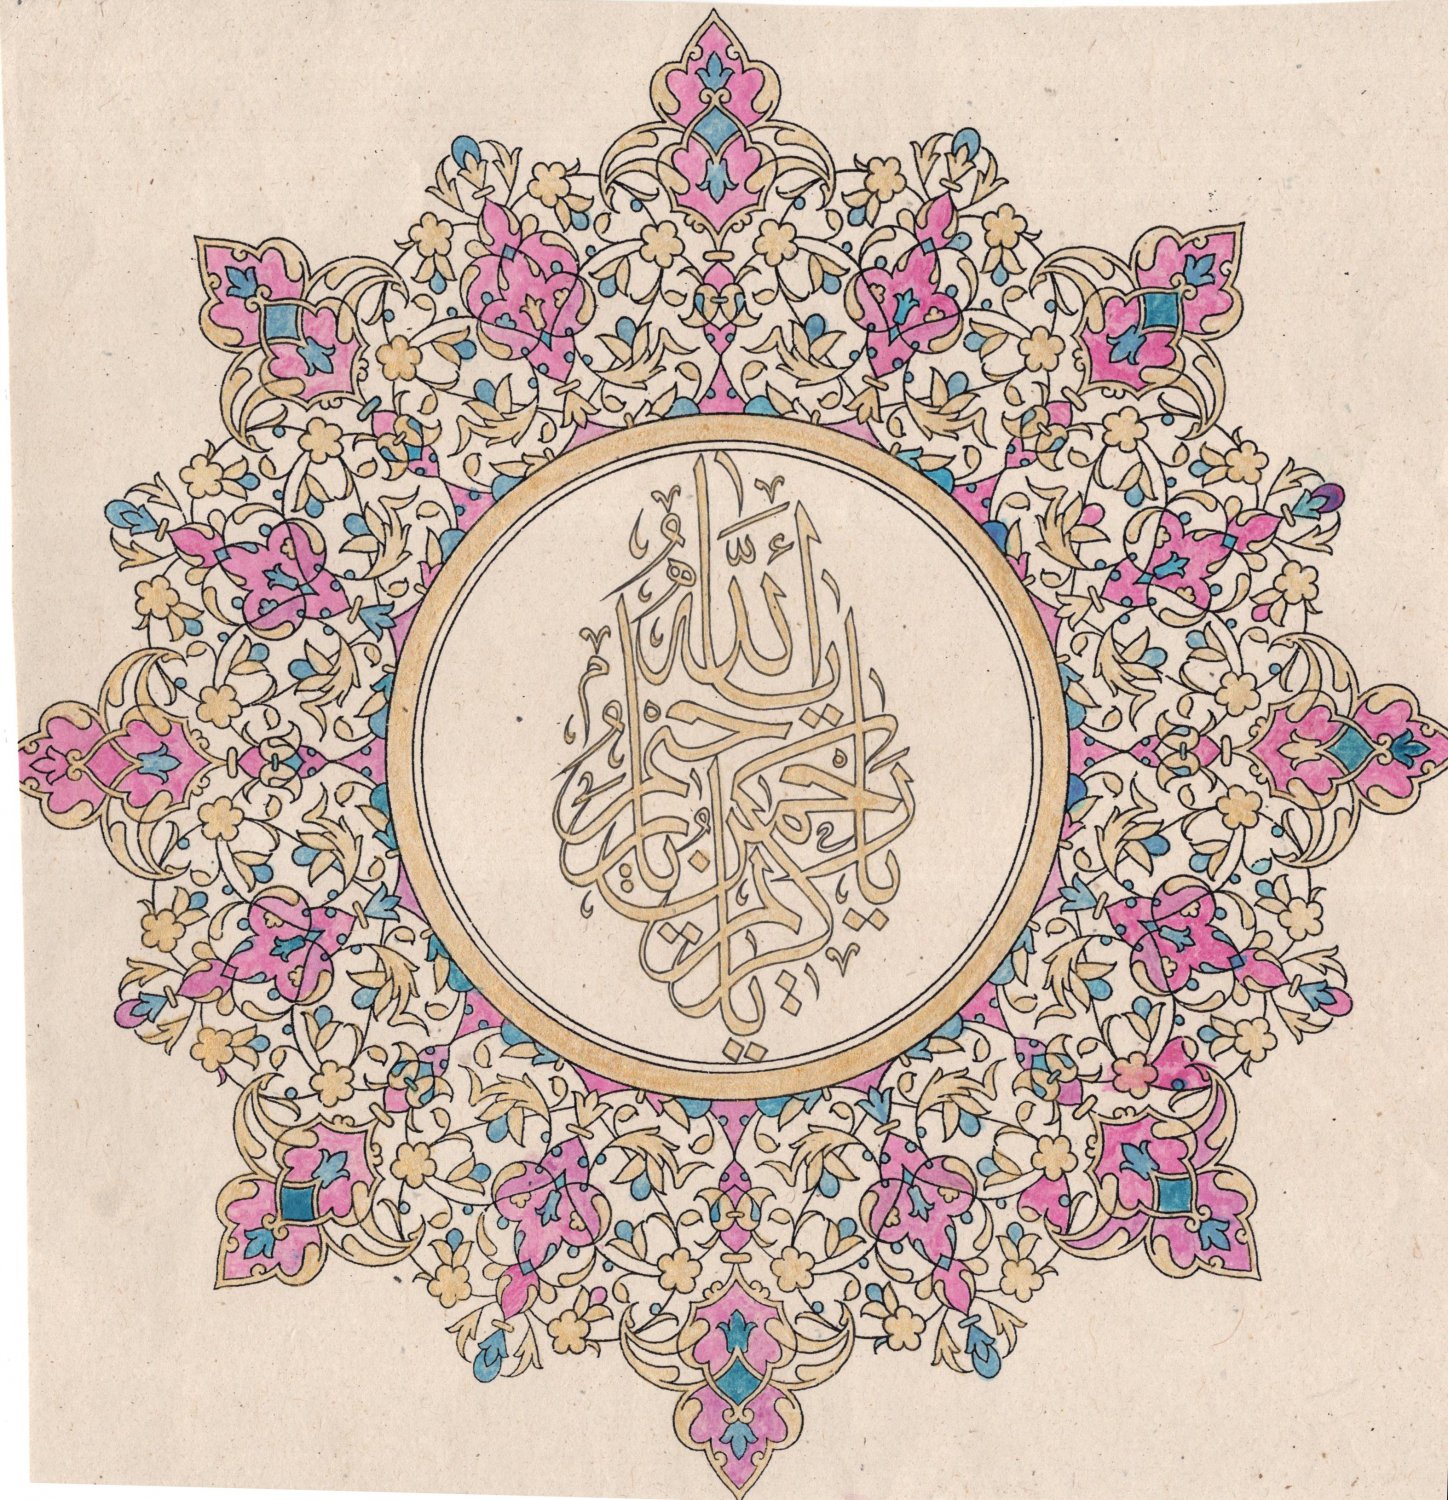 Islamic Muslim Art Rare Handmade Koran Quran Arabic Calligraphy Decor Painting